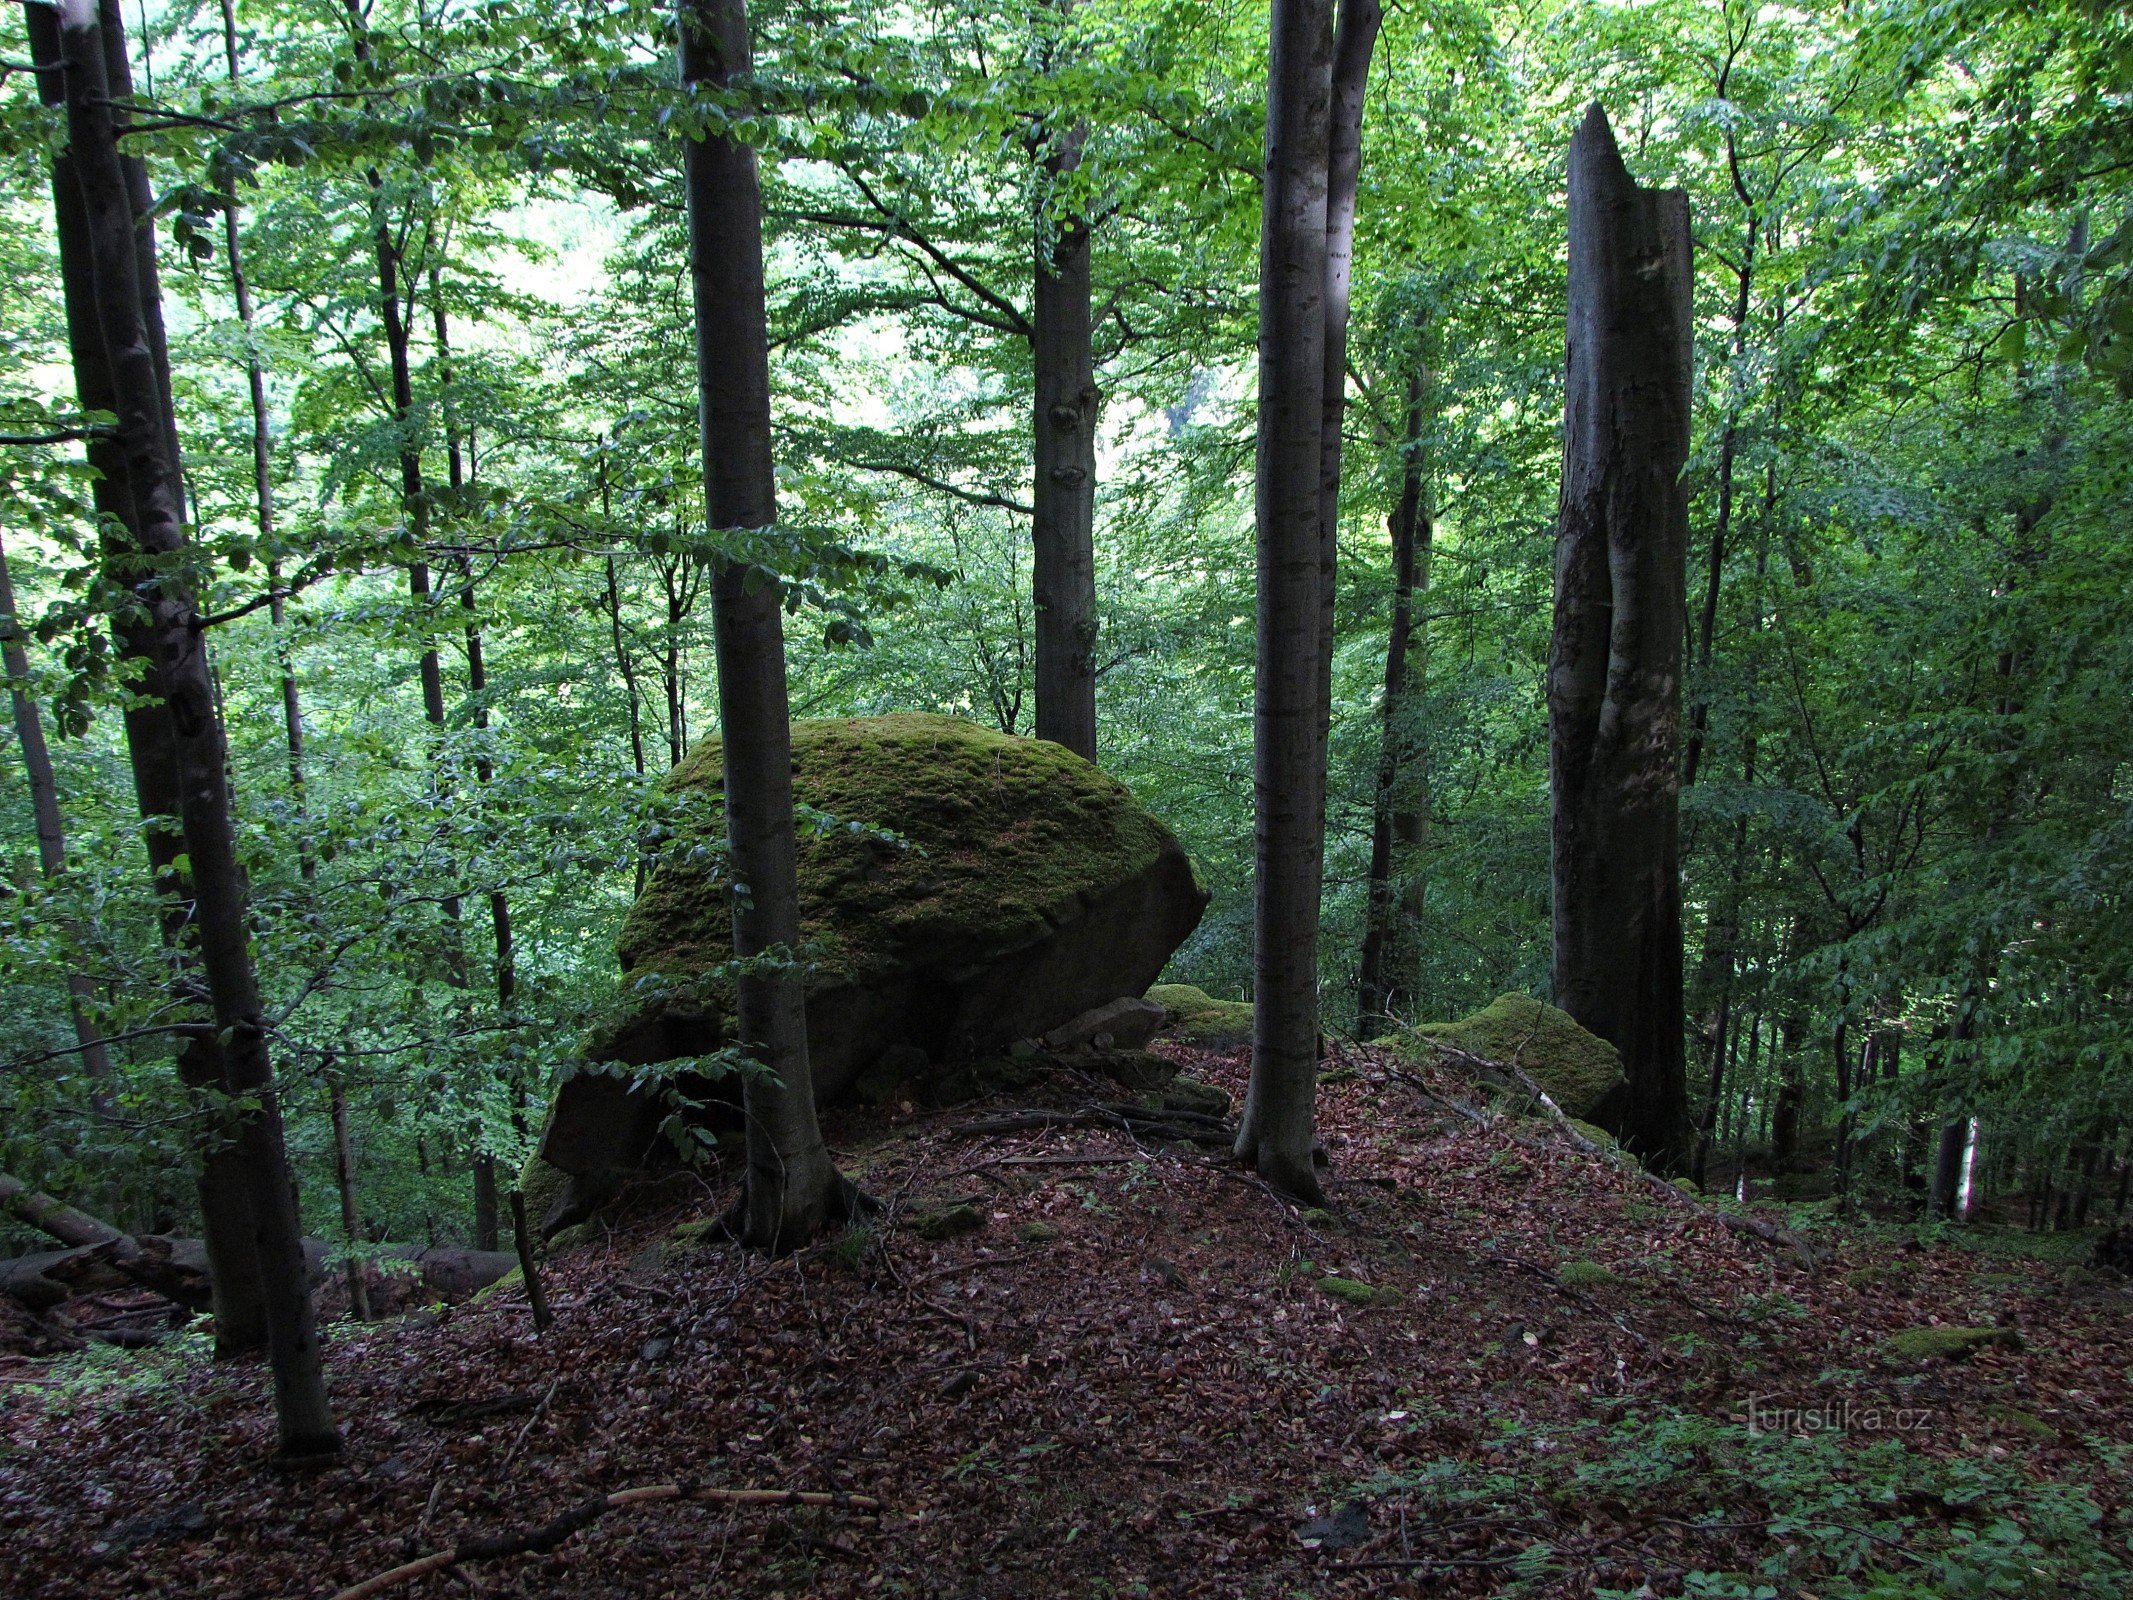 Bludný rocks and its forest